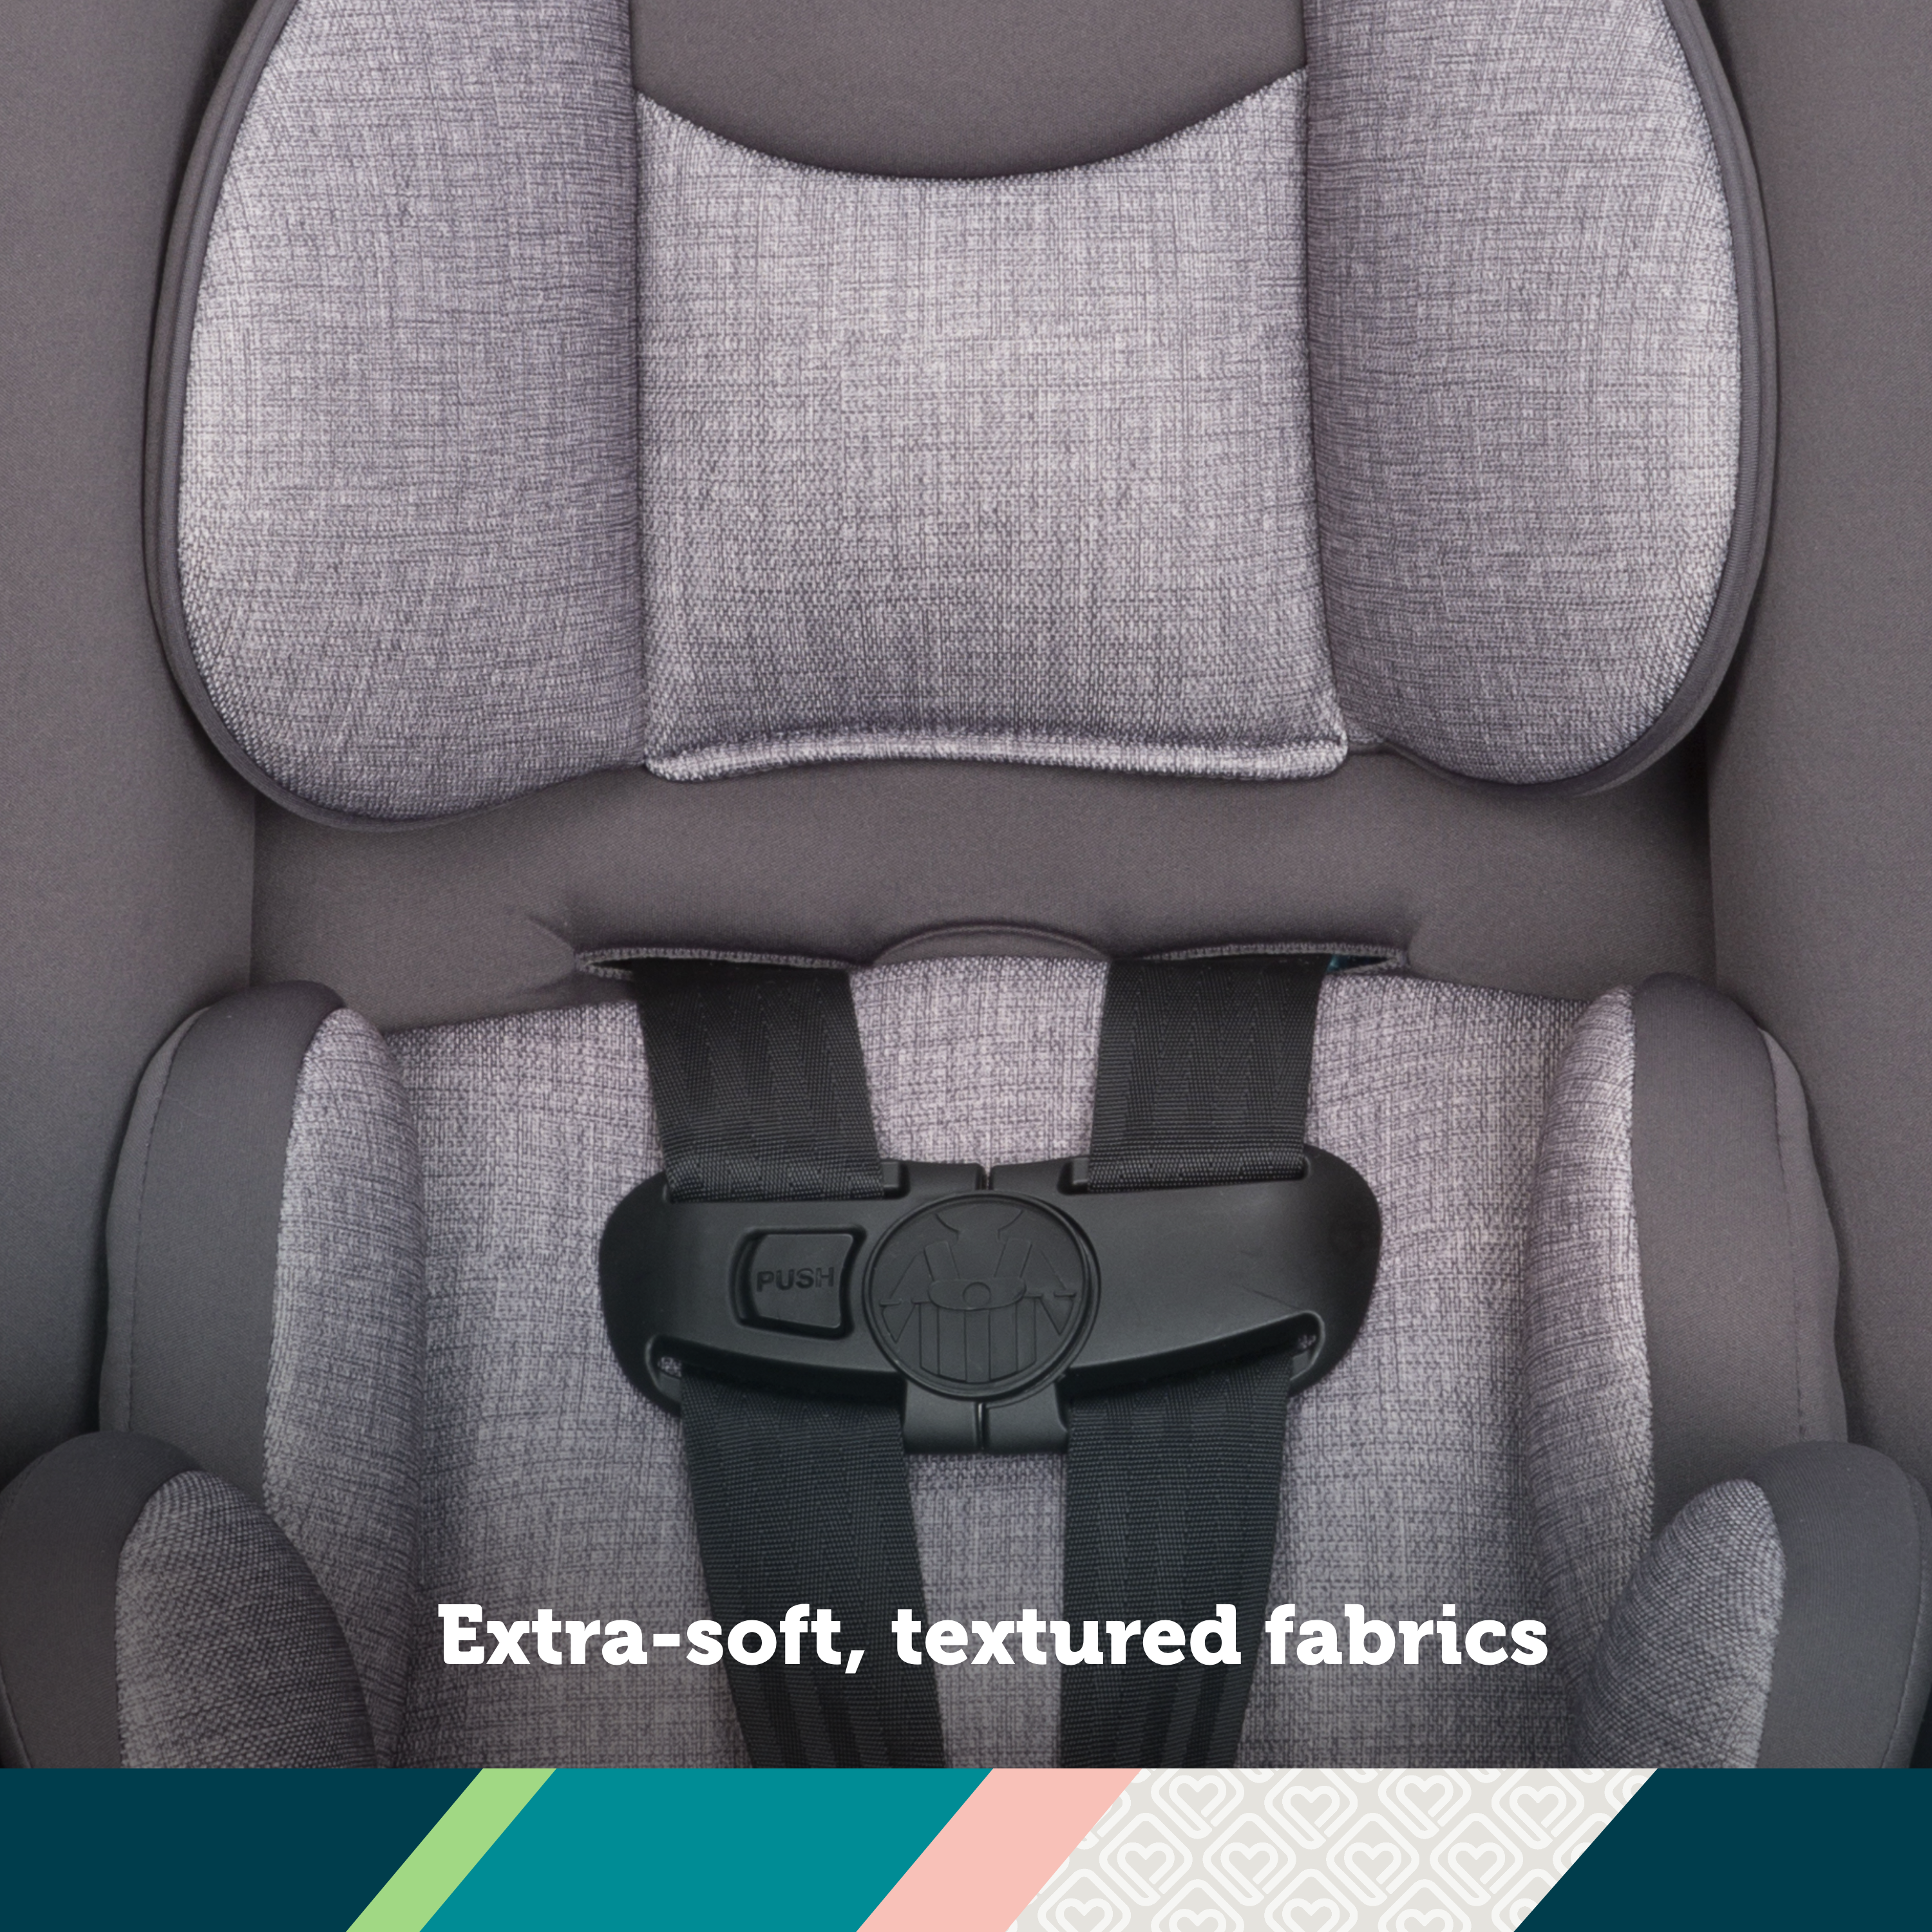 Jive 2-in-1 Convertible Car Seat - extra-soft, textured fabrics